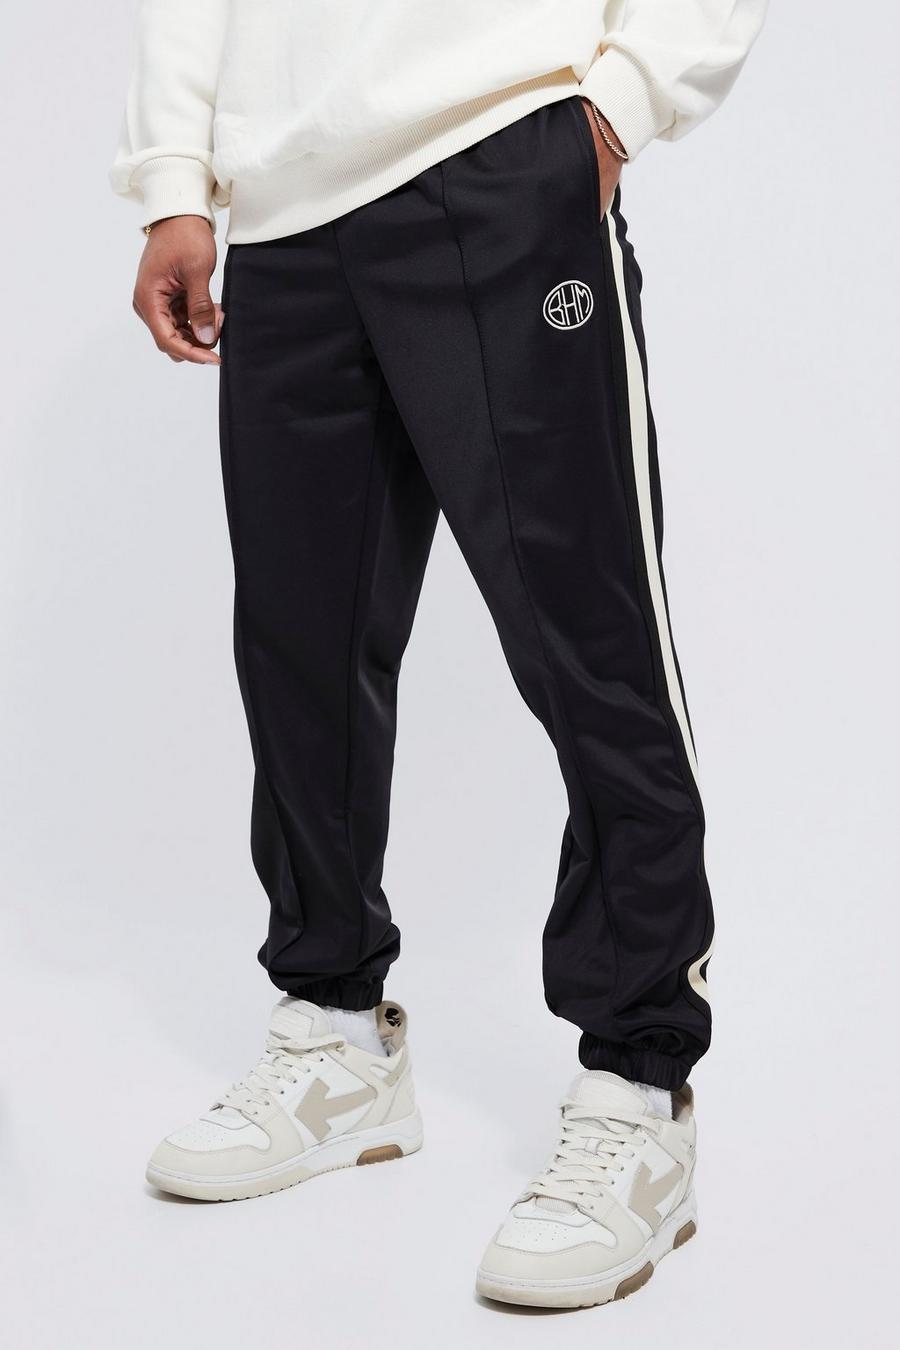 Pantalón deportivo ajustado de tejido por urdimbre con cinta, Black nero